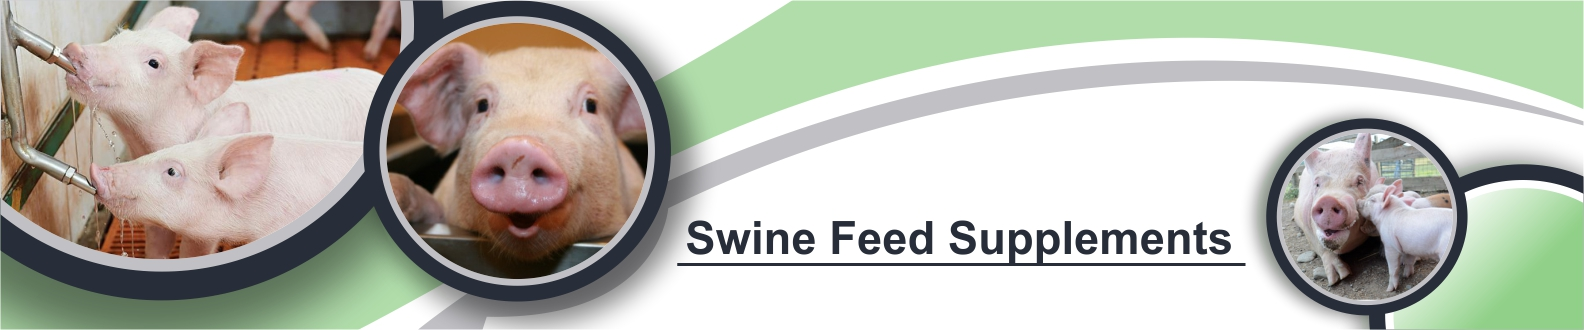 swine-banner-image